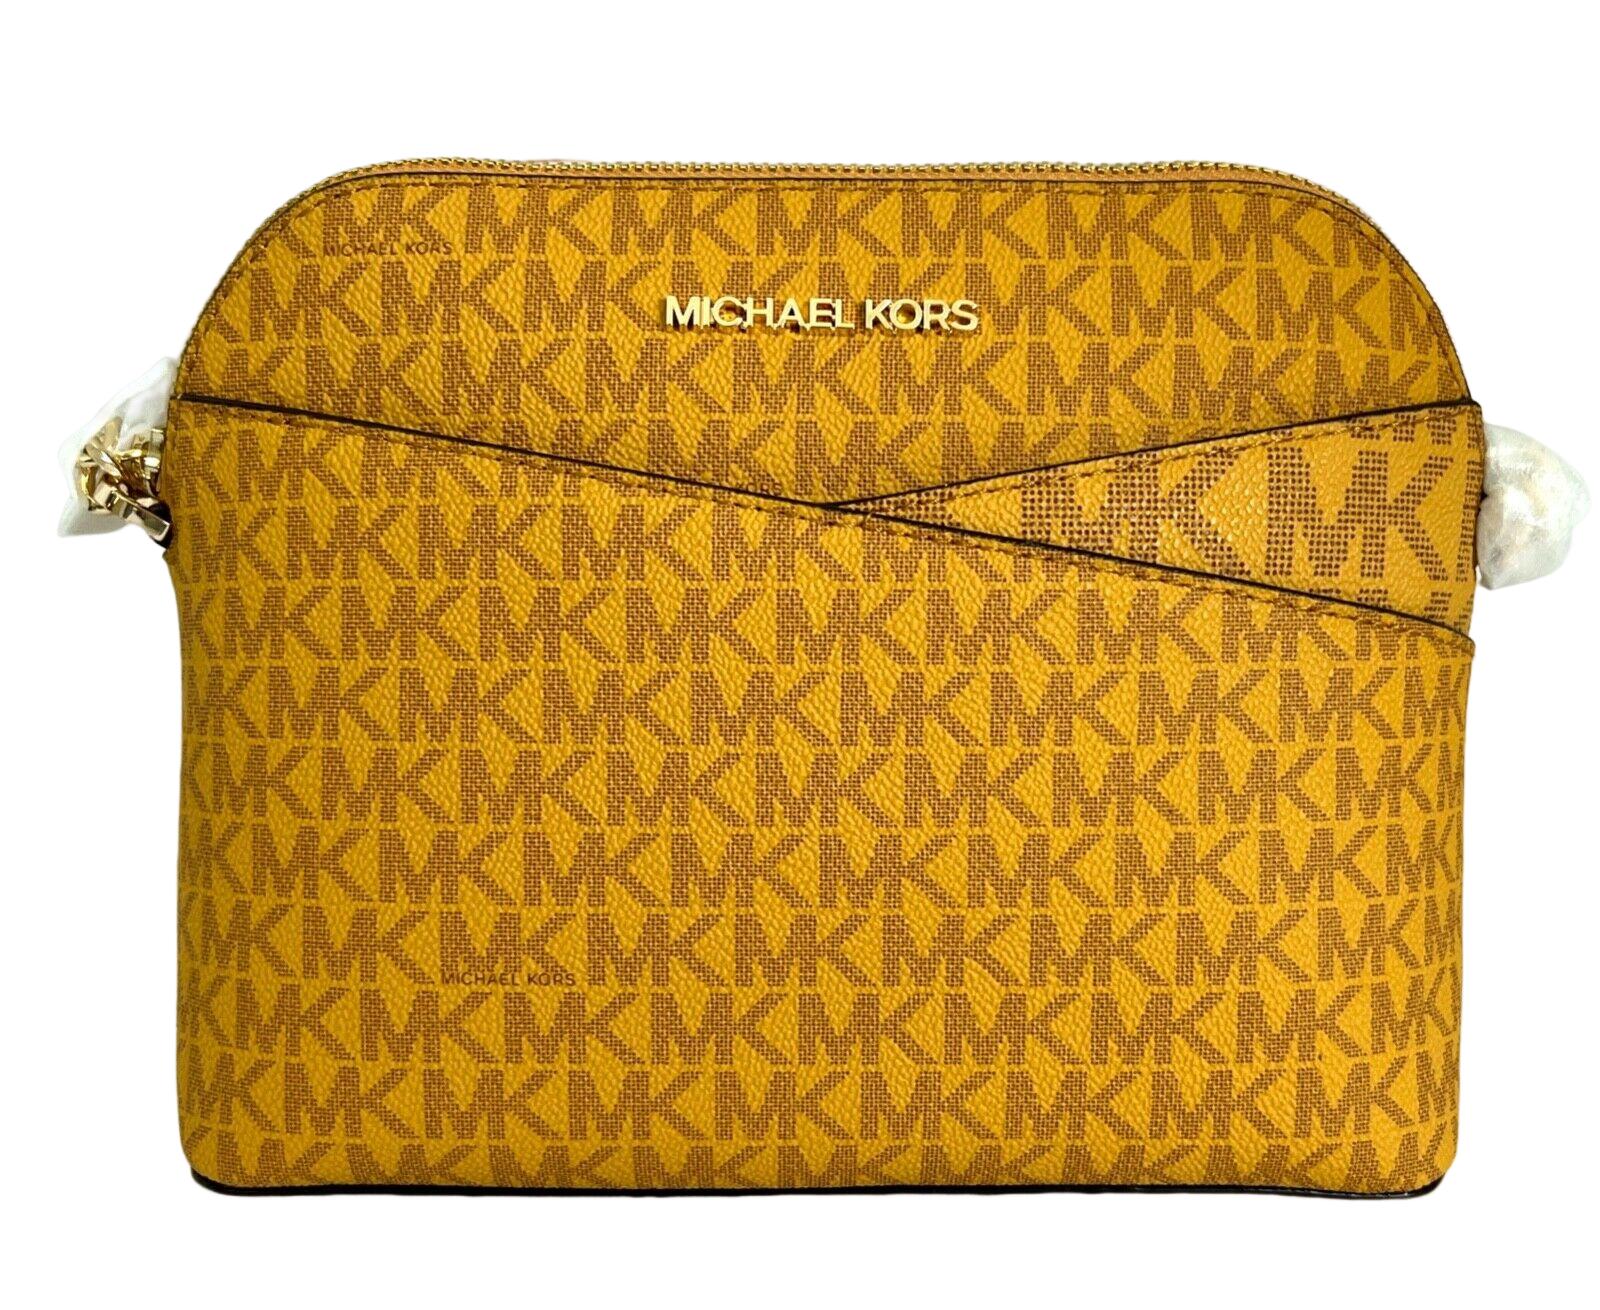 Michael Kors Jet Set Medium Crossbody Leather Handbag in Yellow